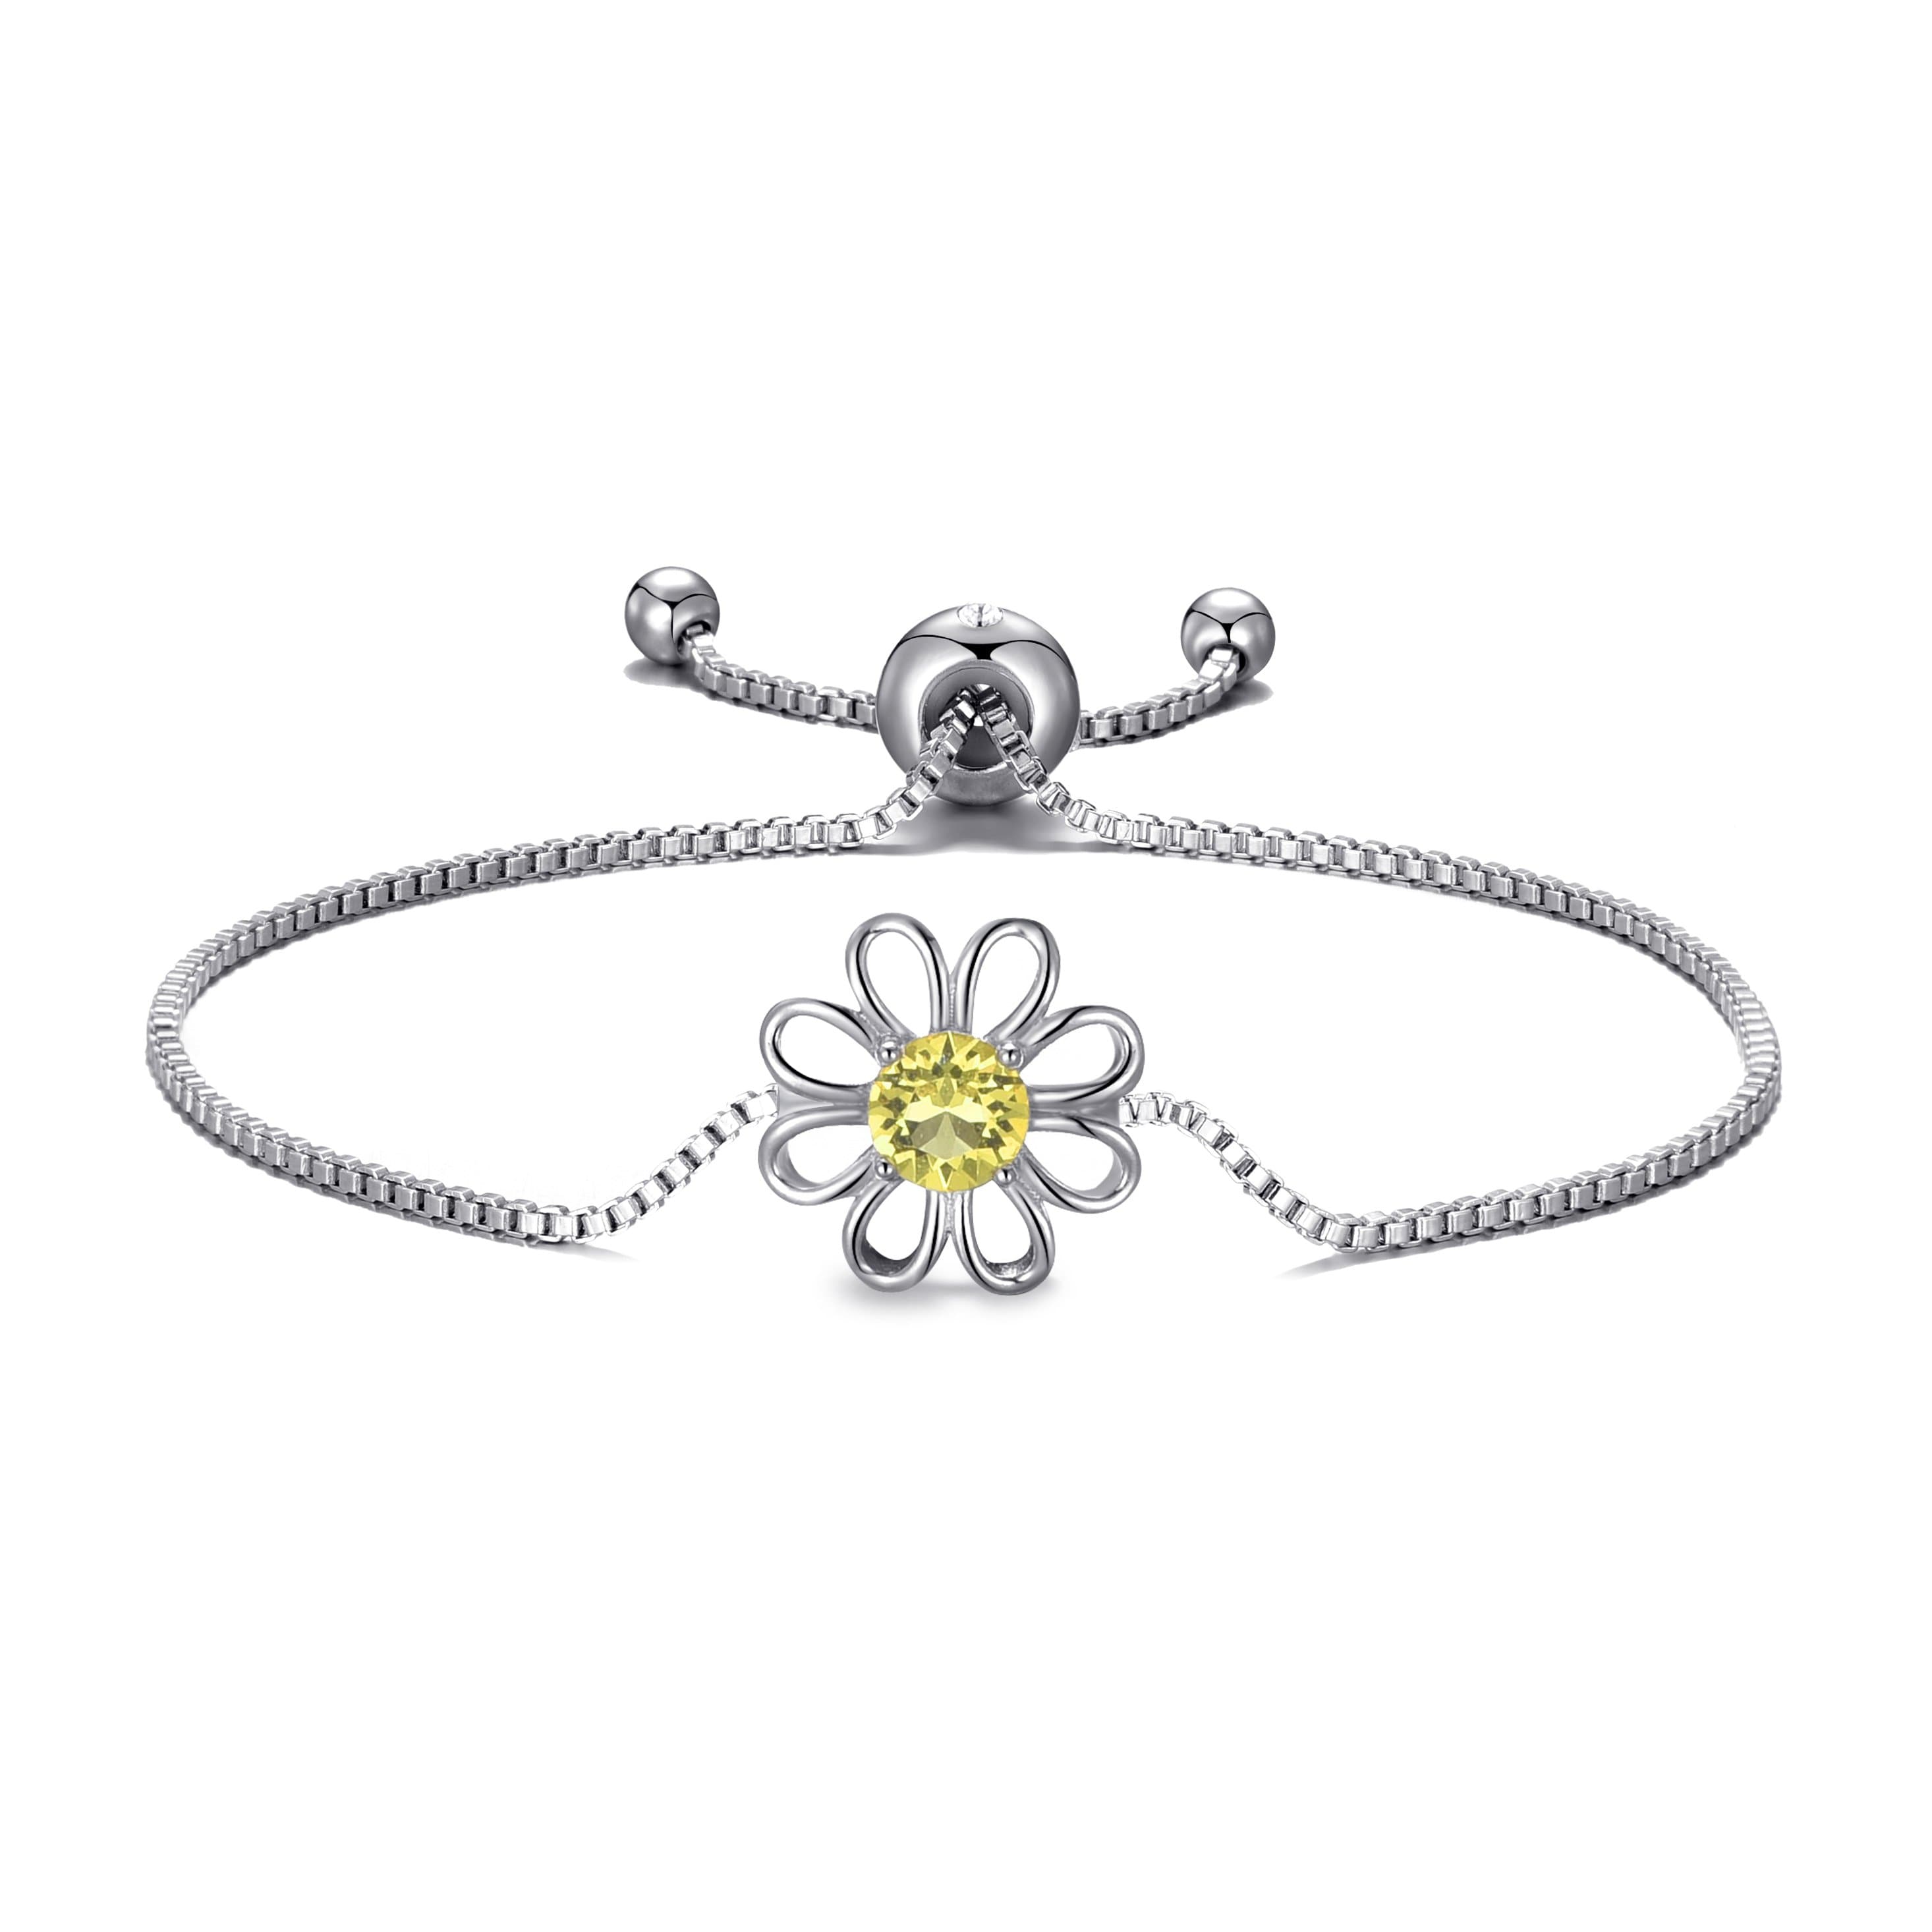 Daisy Crystal Friendship Bracelet Created with Zircondia® Crystals by Philip Jones Jewellery